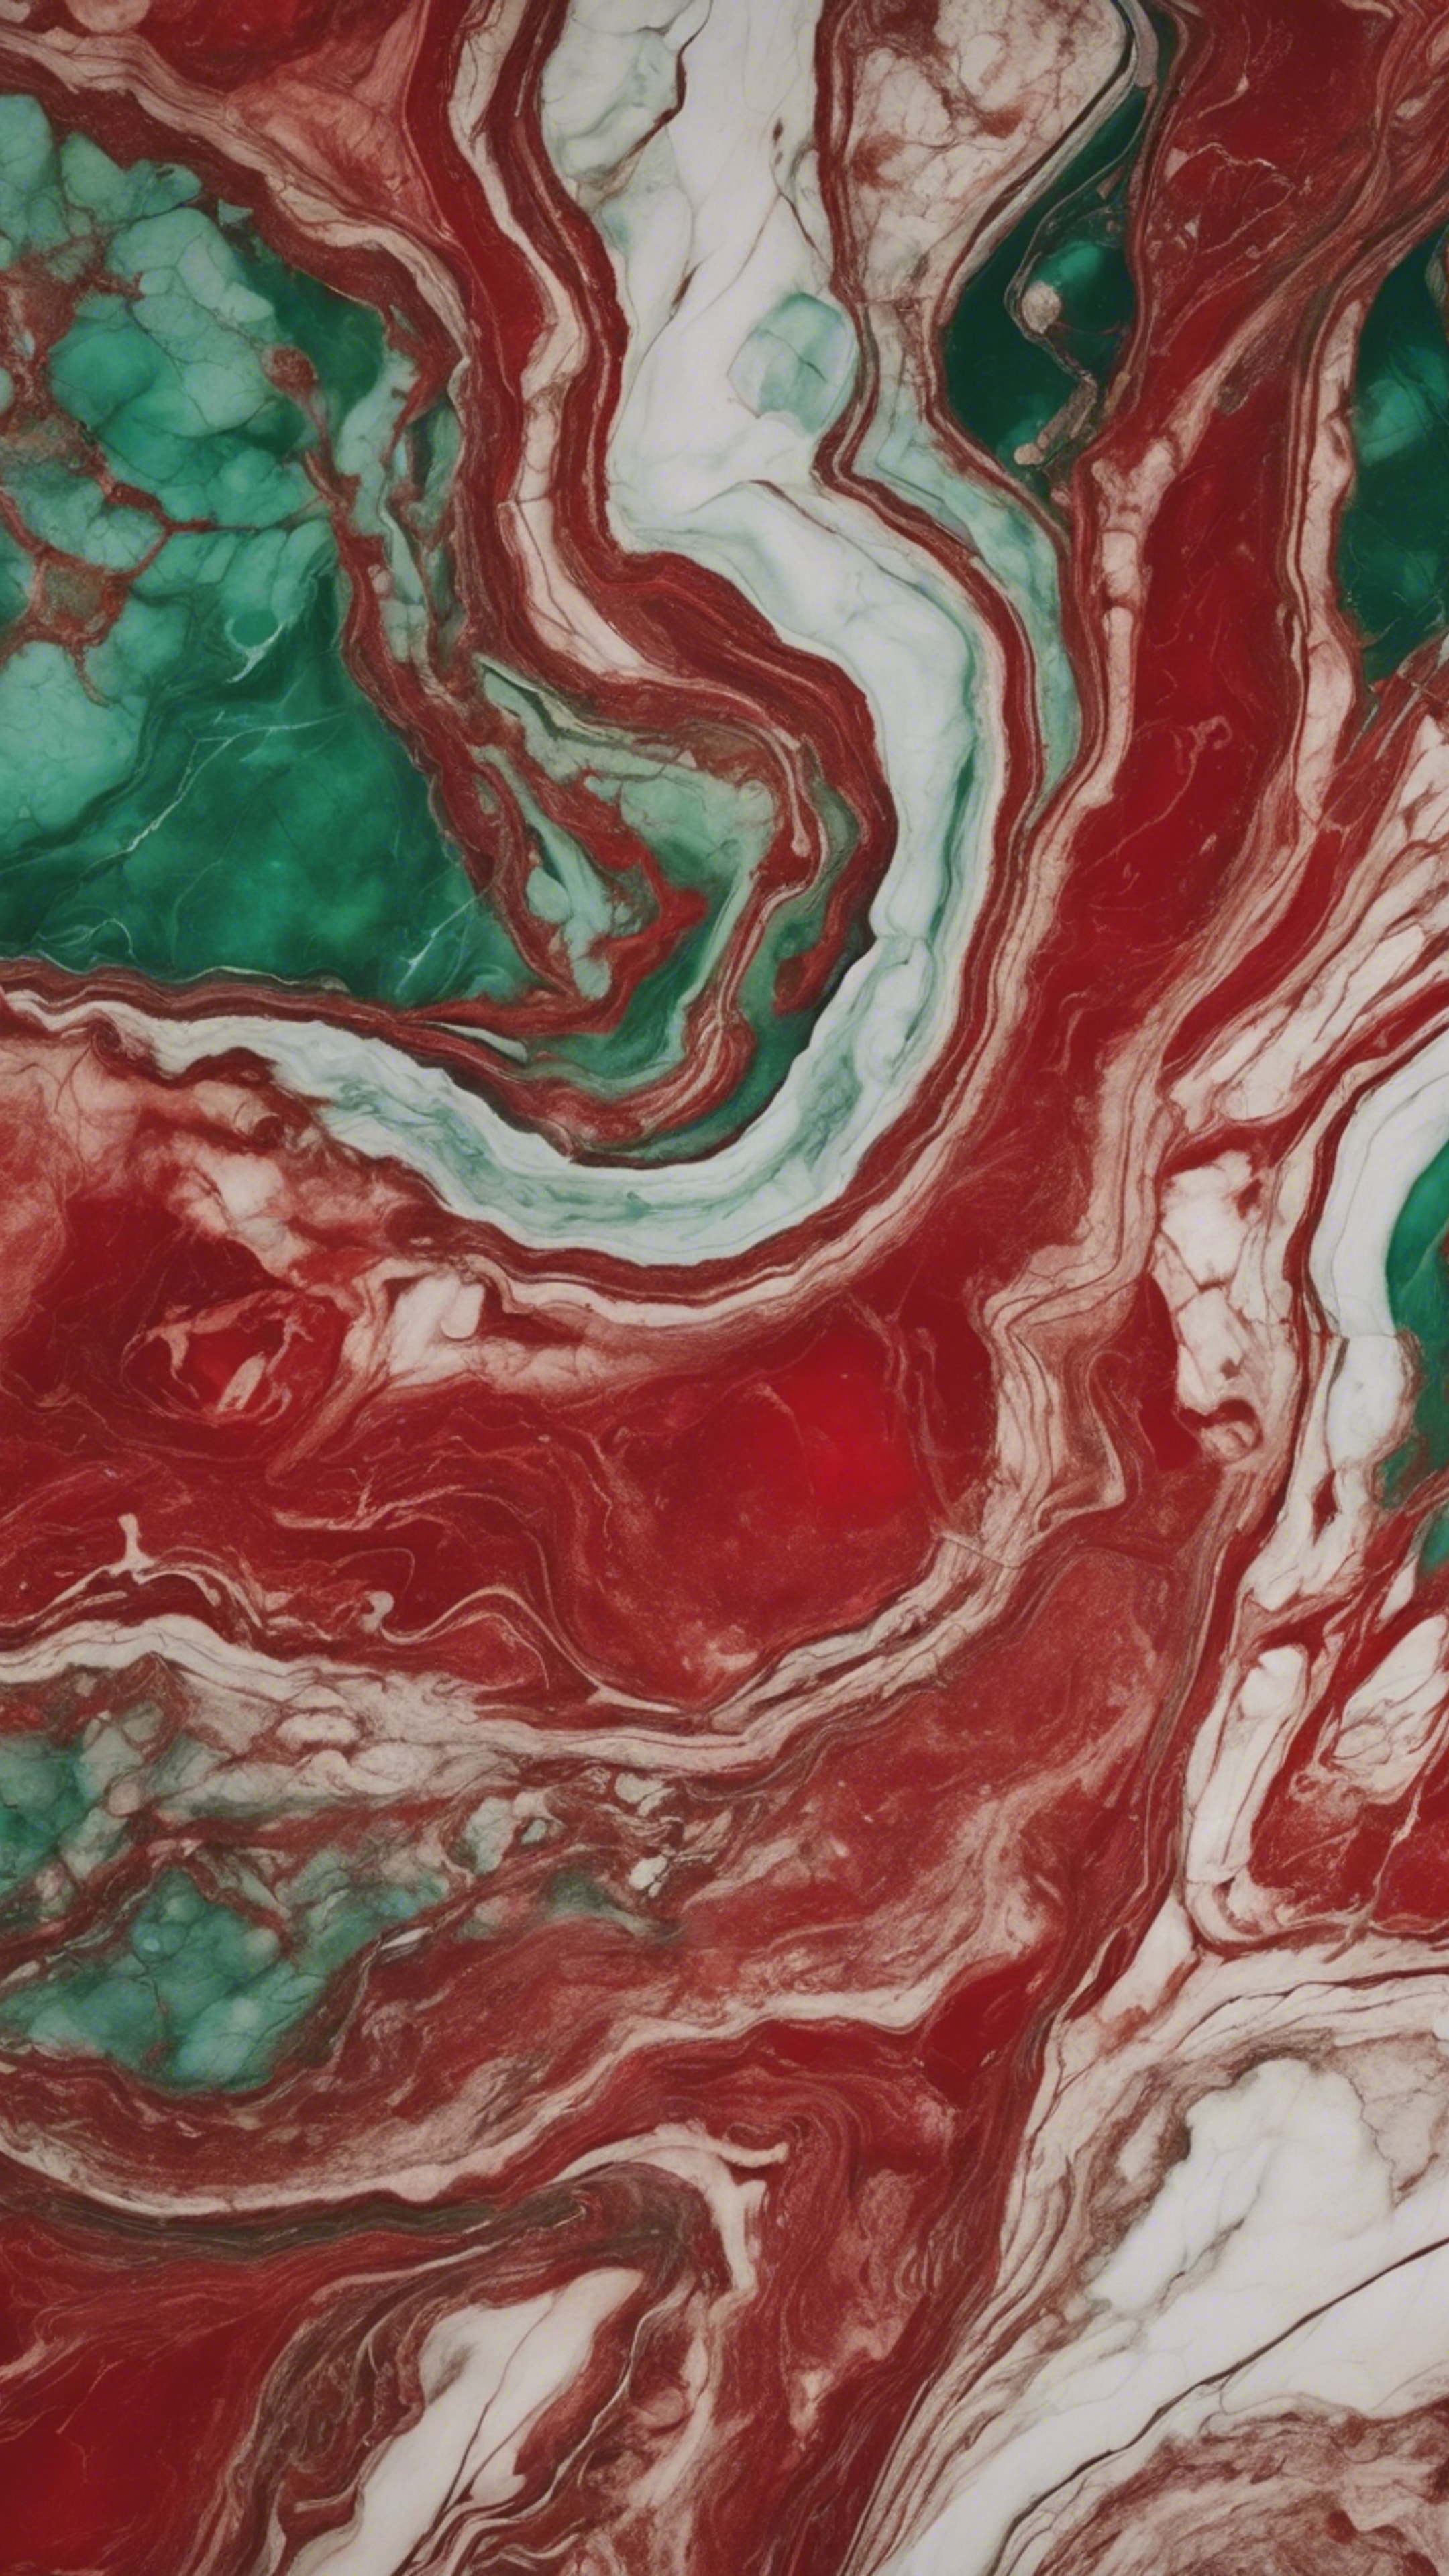 Elegant red and green marble pattern with veins running across. Fond d'écran[edb4d3fbd47c4b239d5a]